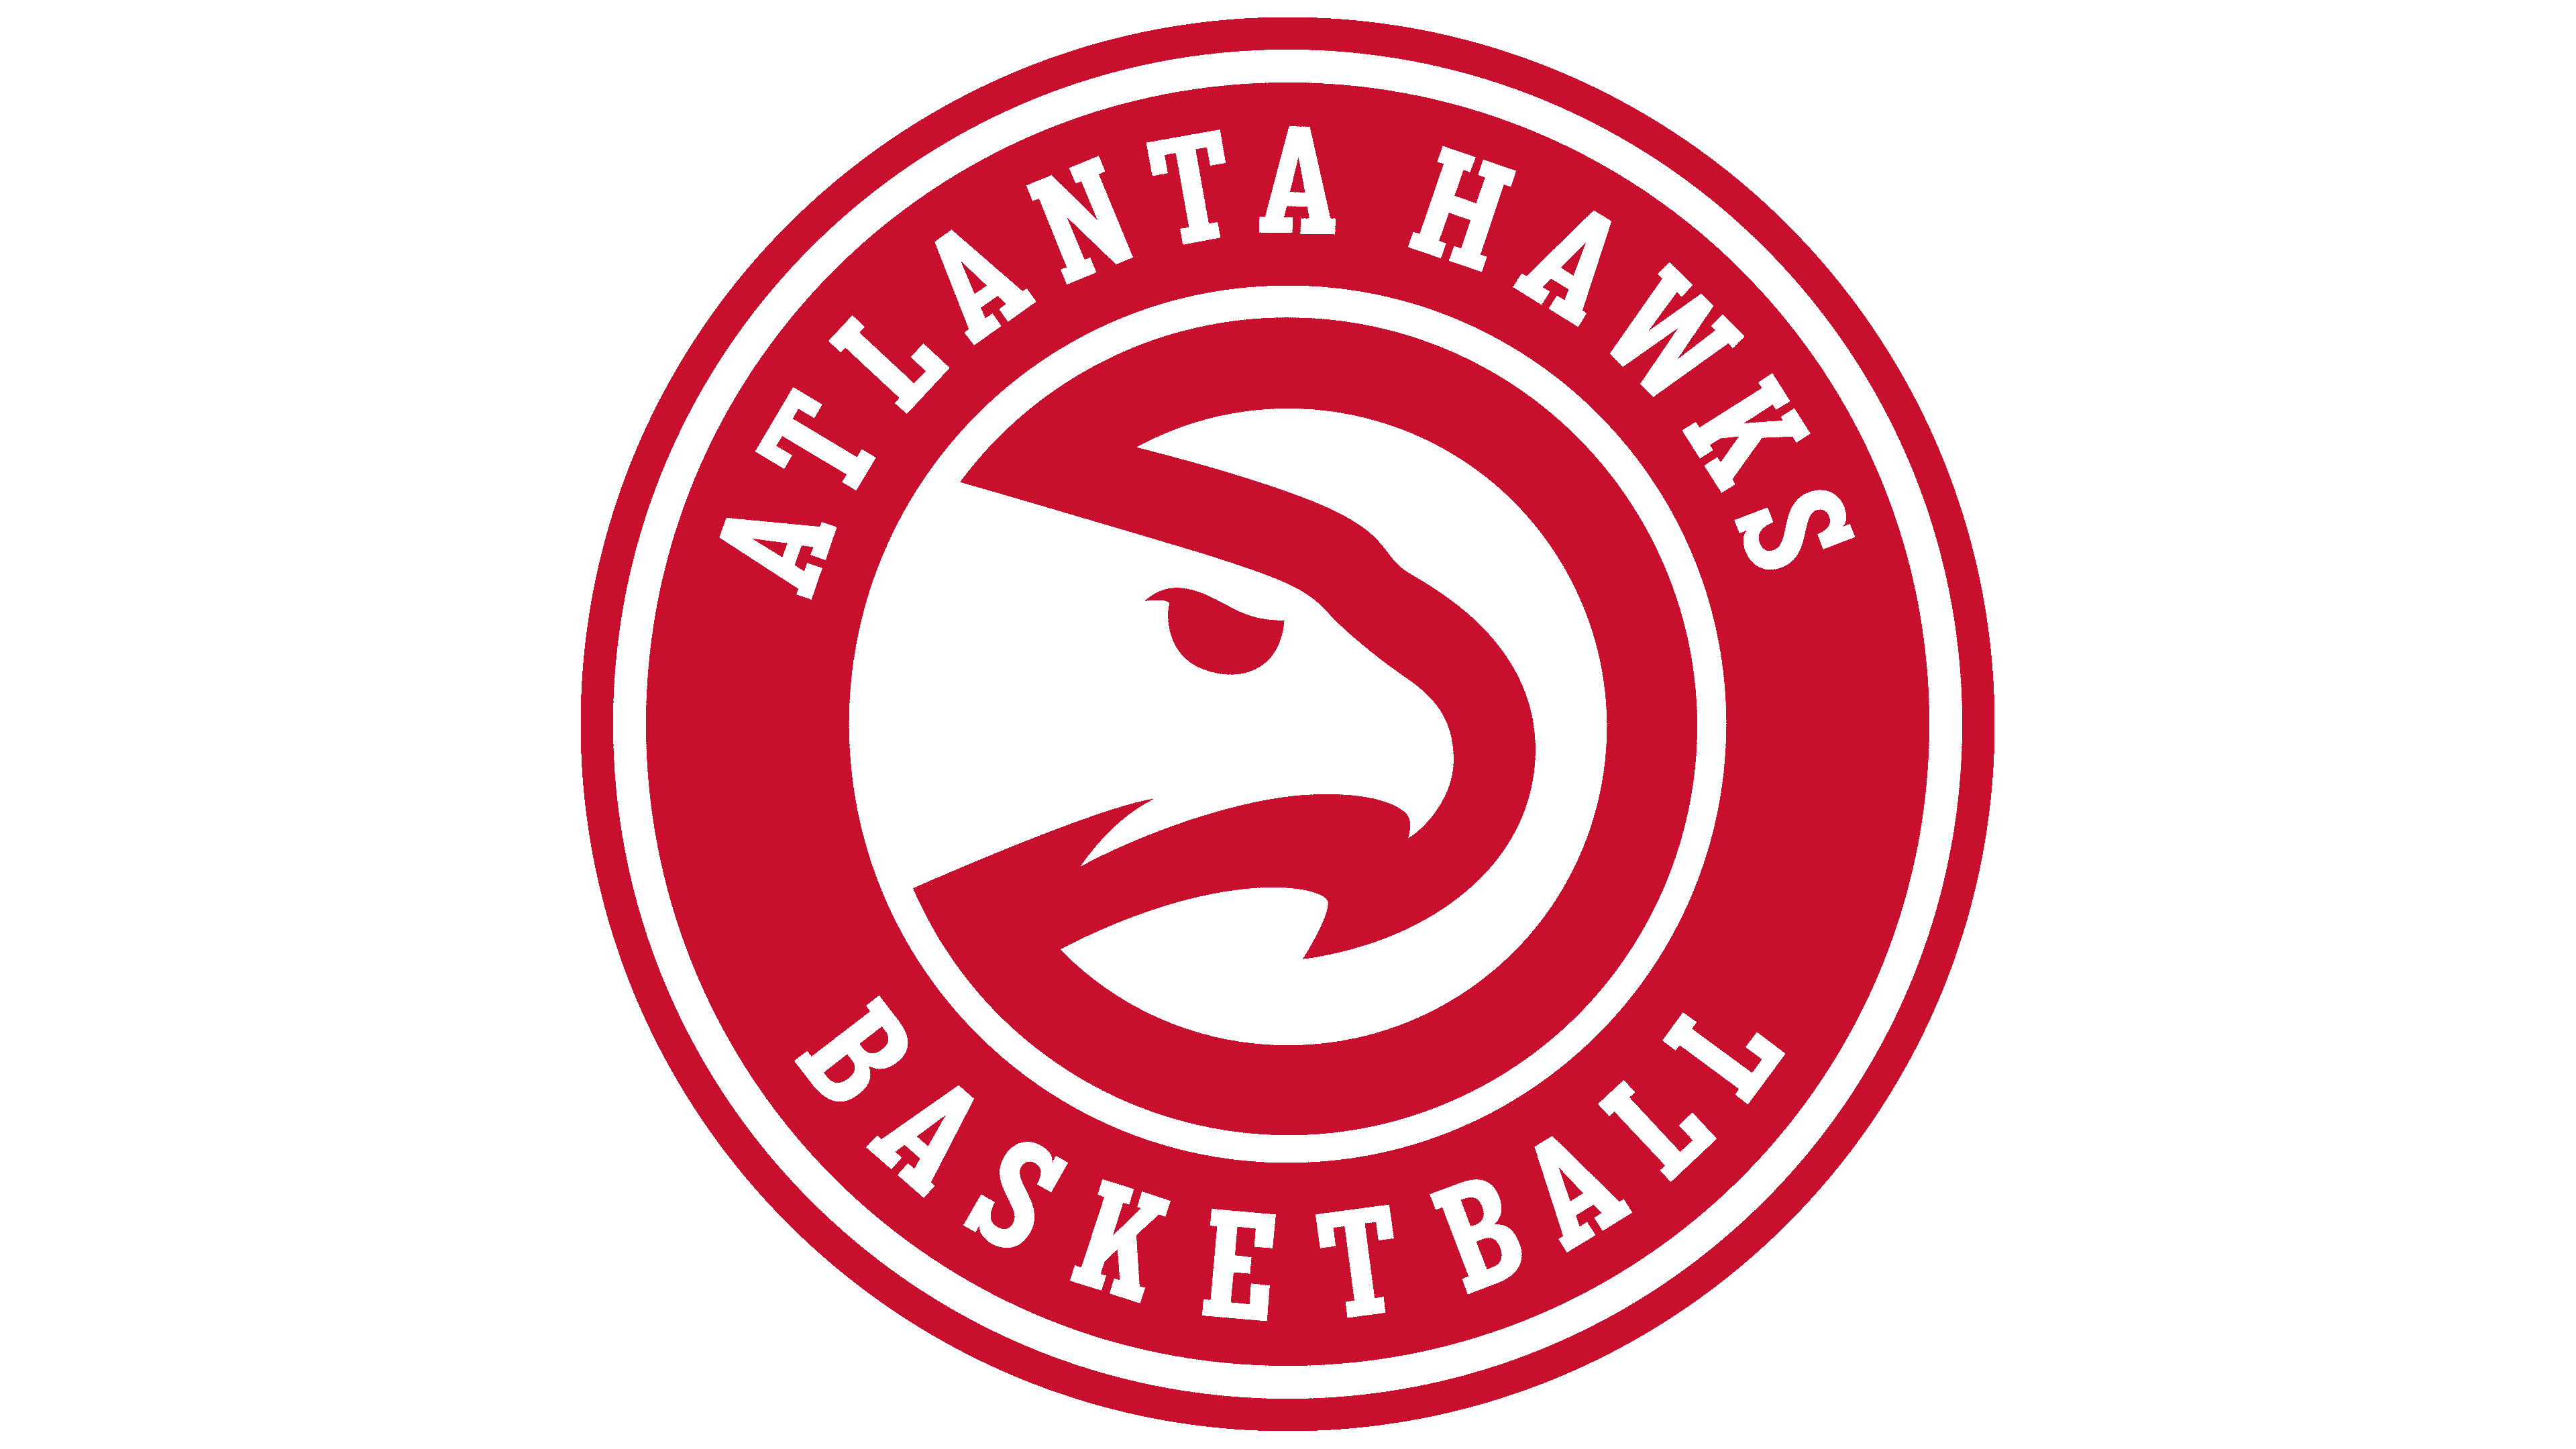 Atlanta Hawks Logo, symbol, meaning, history, PNG, brand